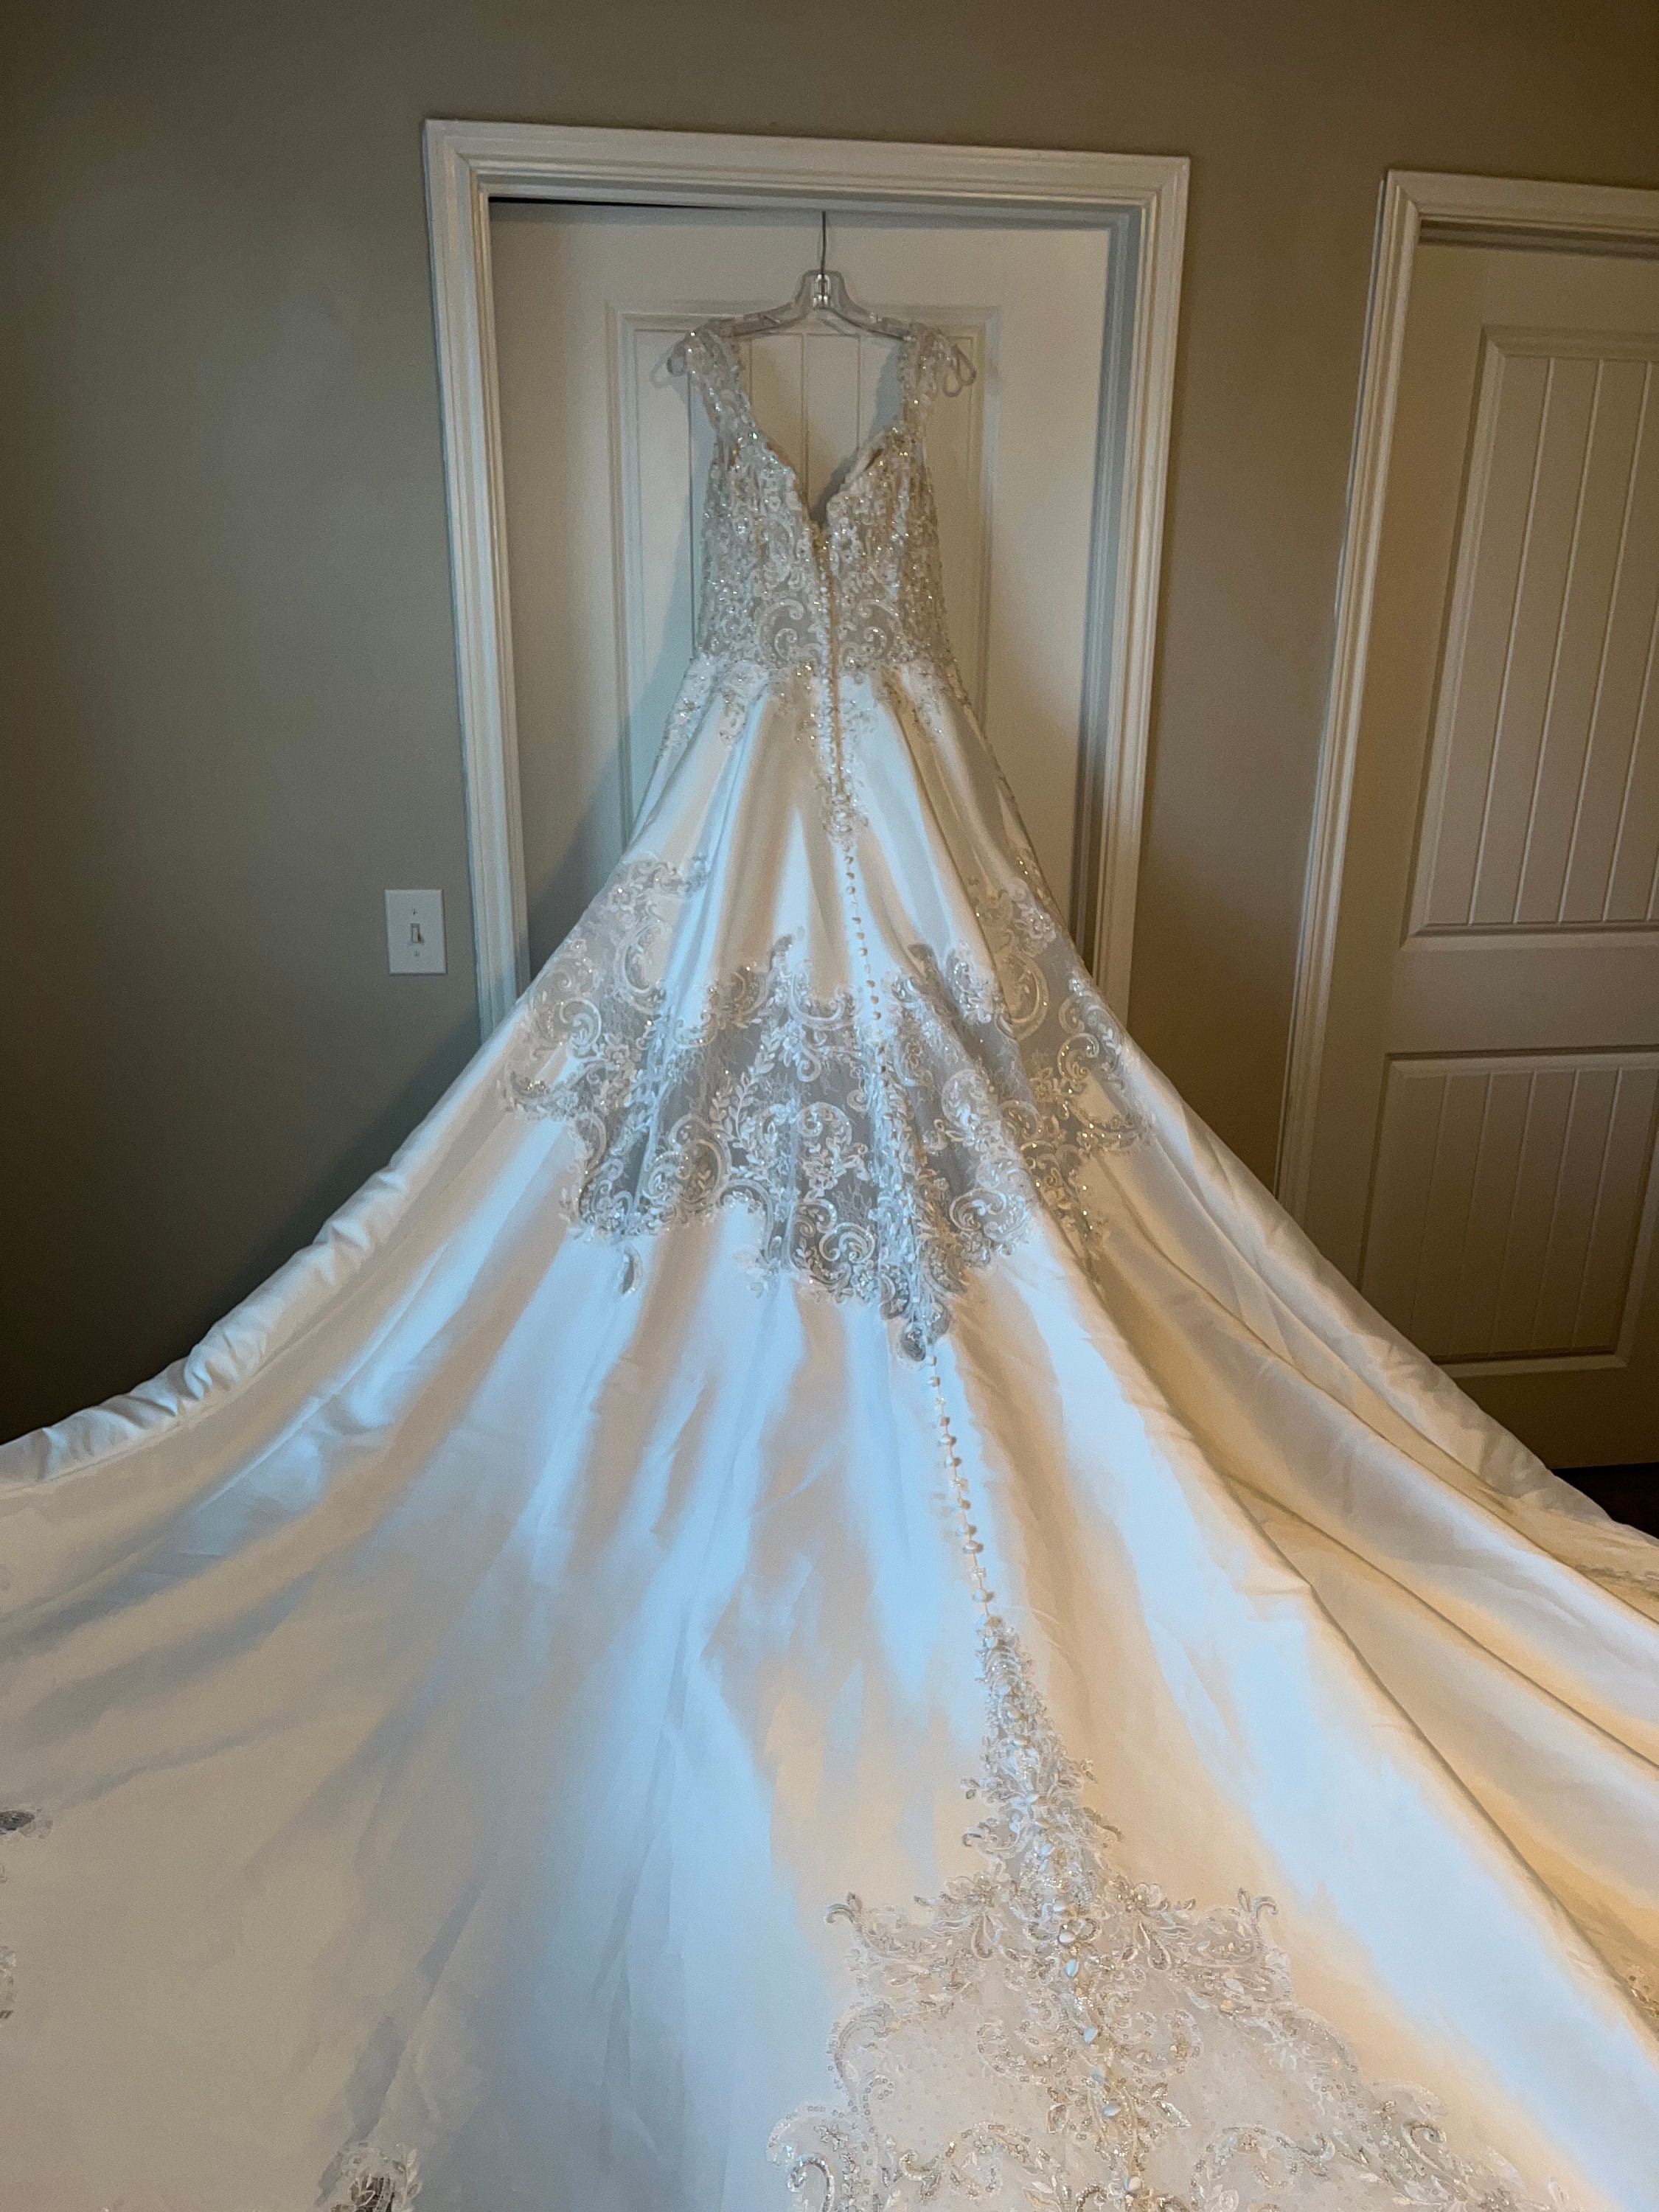 Brand New Wedding Dress Veil Included - Etsy